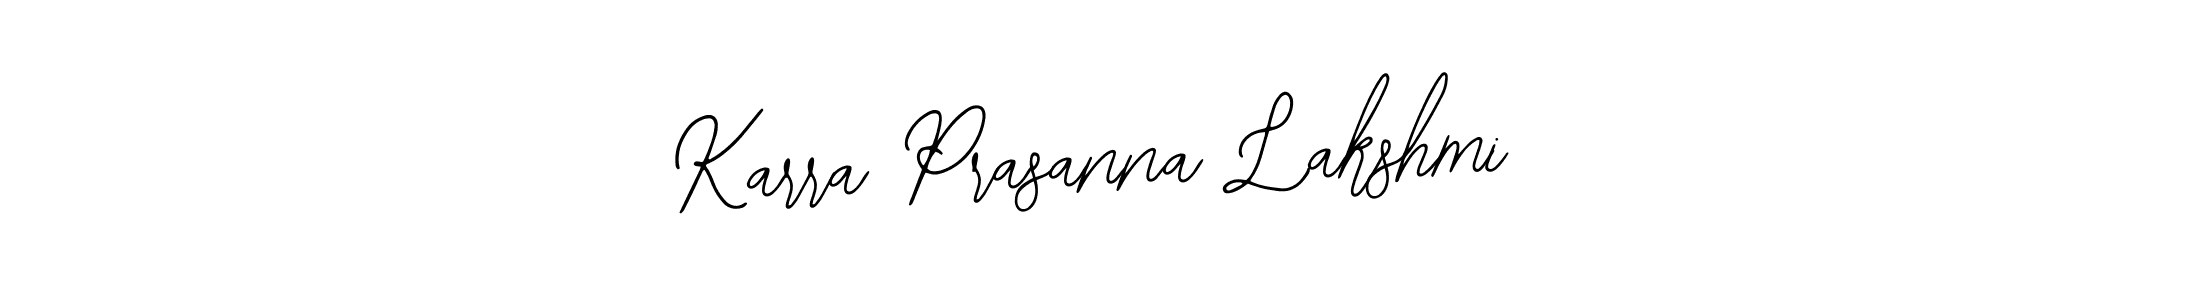 Make a beautiful signature design for name Karra Prasanna Lakshmi. Use this online signature maker to create a handwritten signature for free. Karra Prasanna Lakshmi signature style 12 images and pictures png